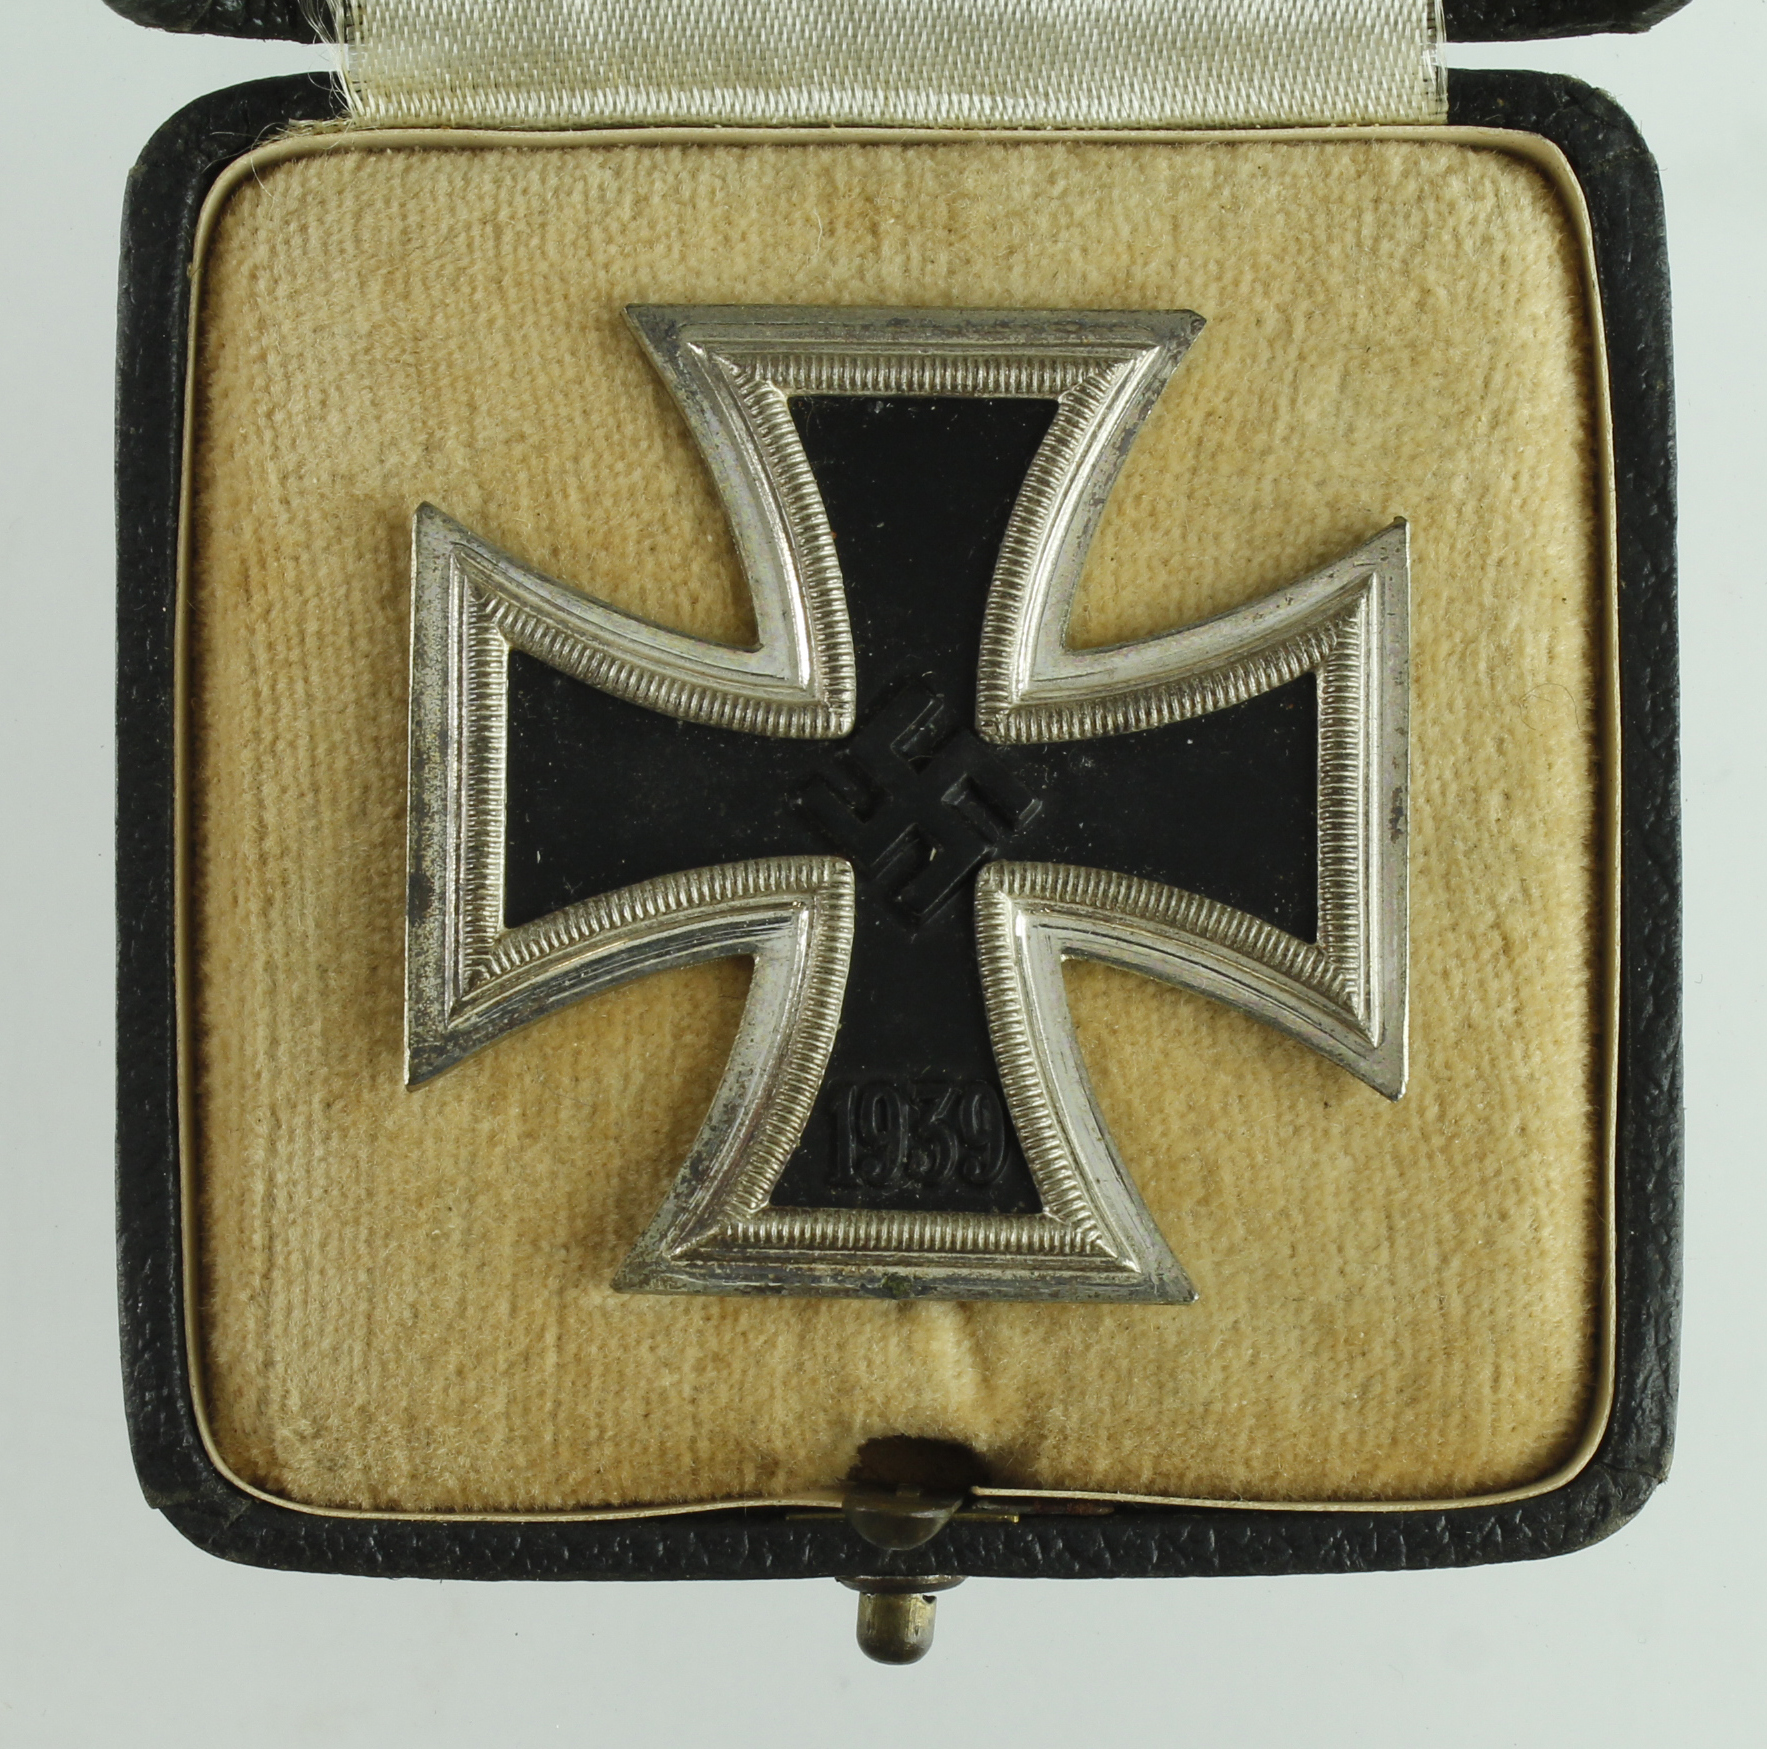 German 3rd Reich Iron Cross 1st Class in case of issue, cross maker marked '15'.